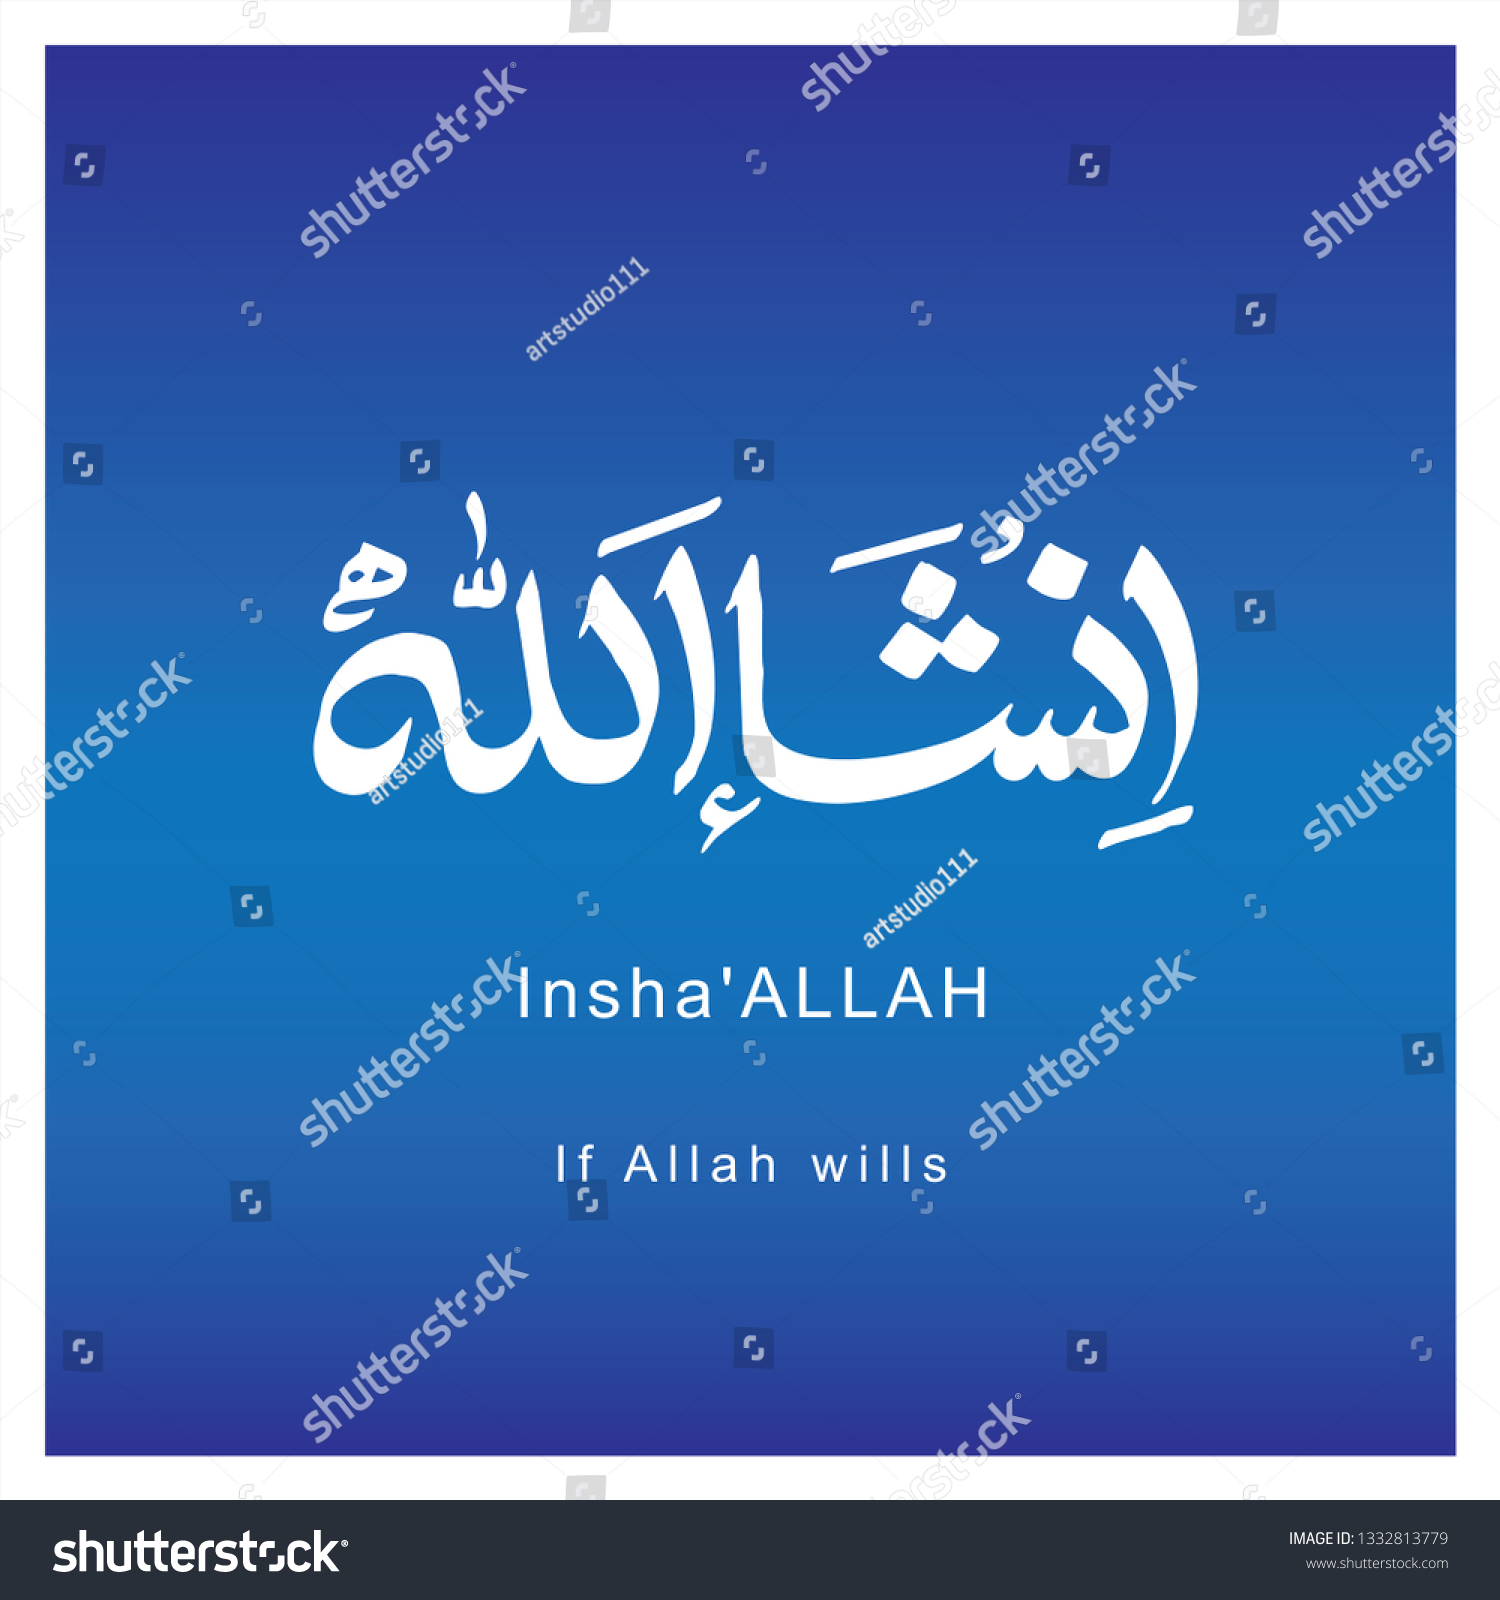 In insha arabic allah Insha